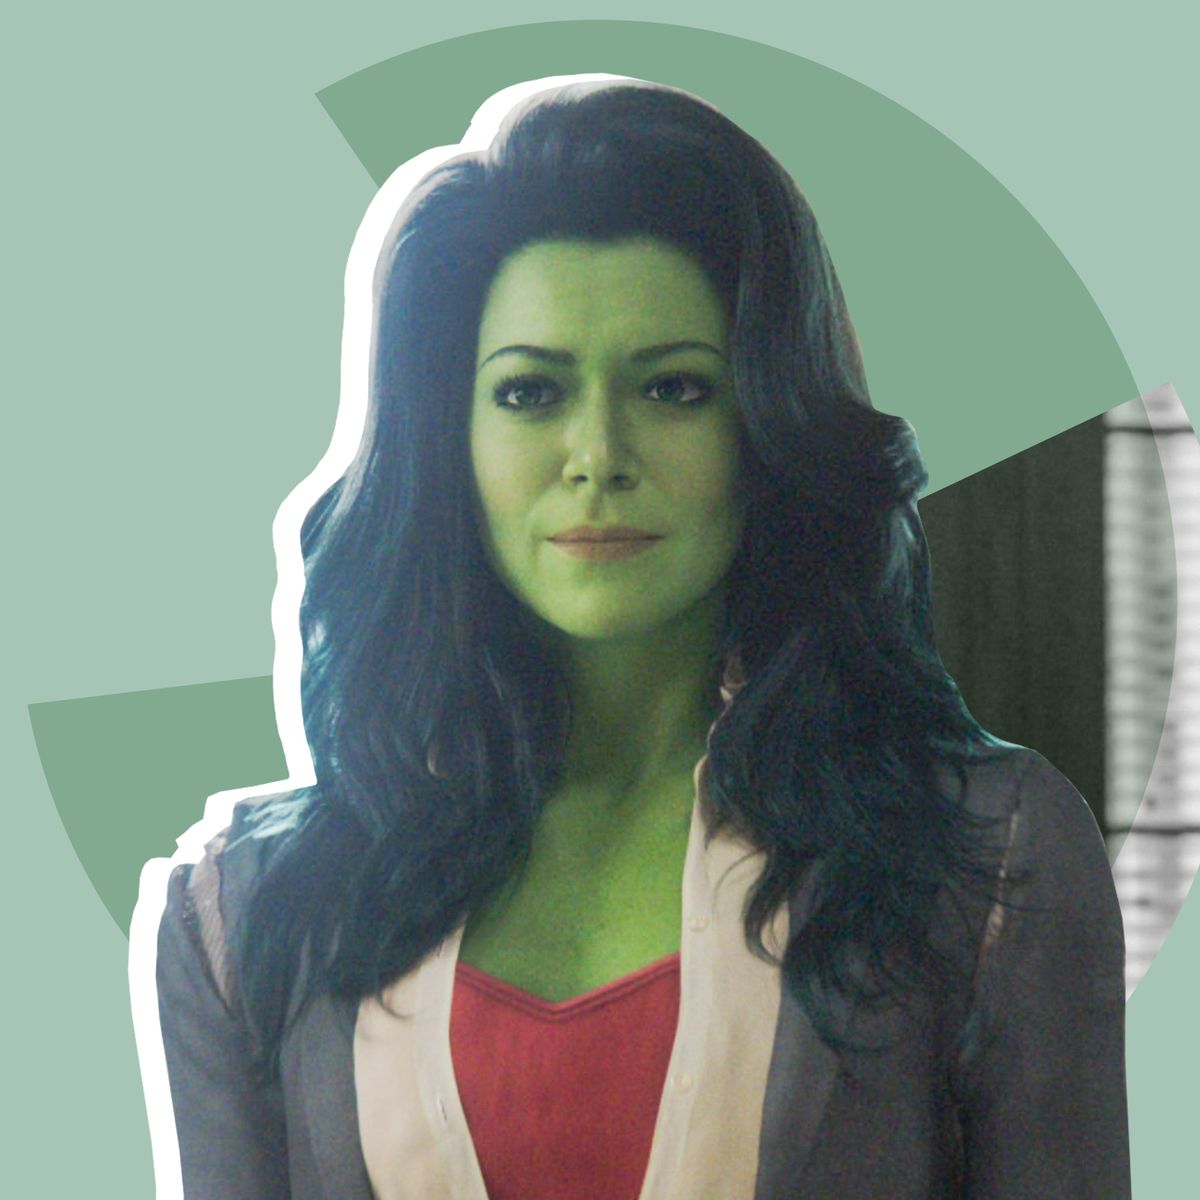 She-Hulk season 2 Details: She-Hulk season 2: Here's everything you need to  know - The Economic Times